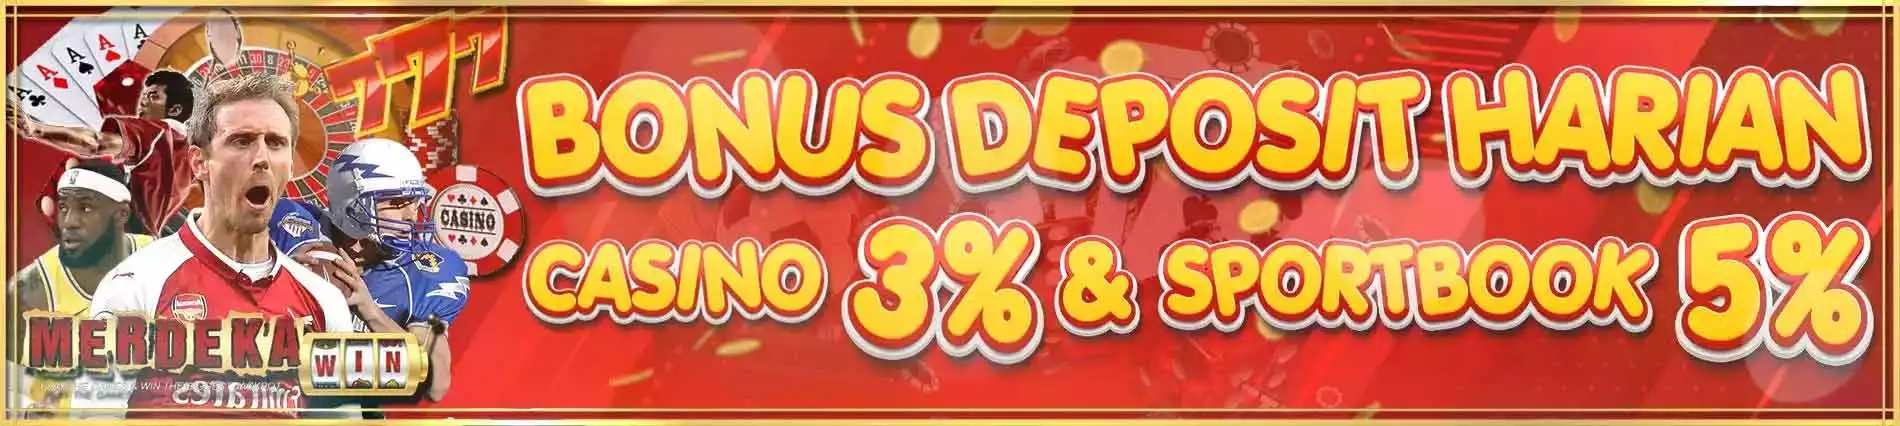 Bonus Deposit Harian Sportsbook 5% & Casino 3%